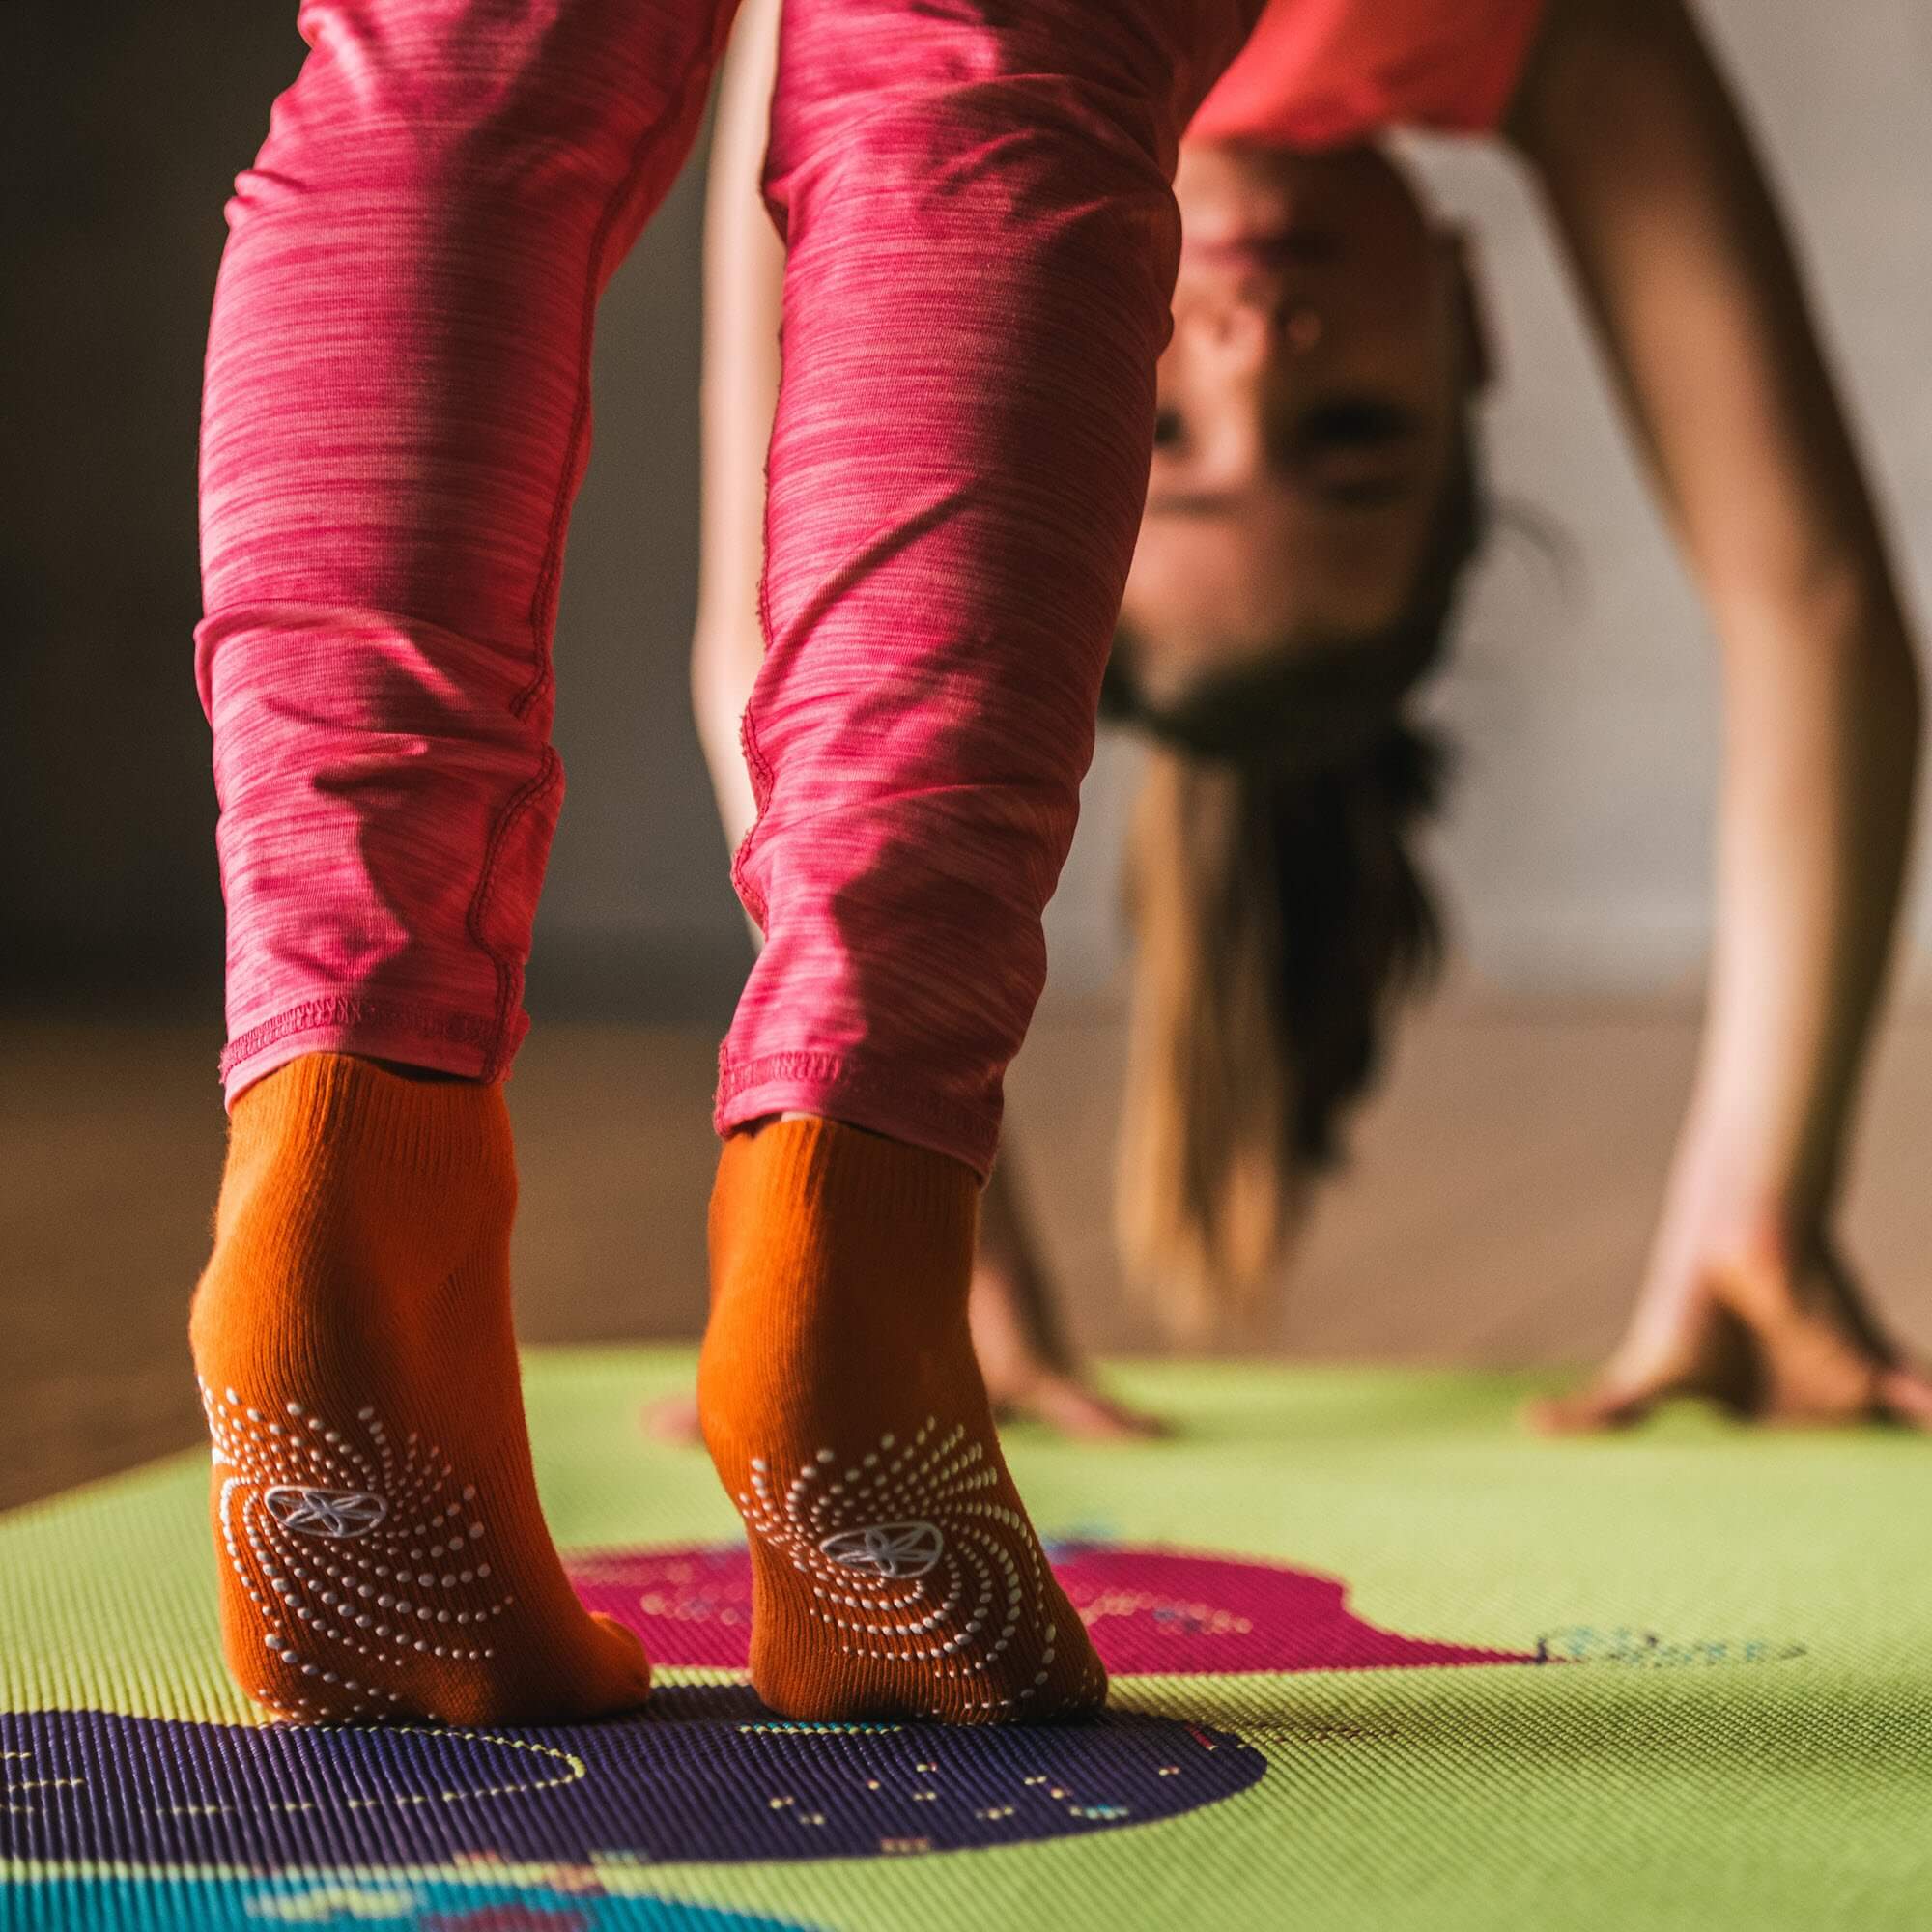 Yoga Props and Yoga Socks - Go Go Yoga For Kids